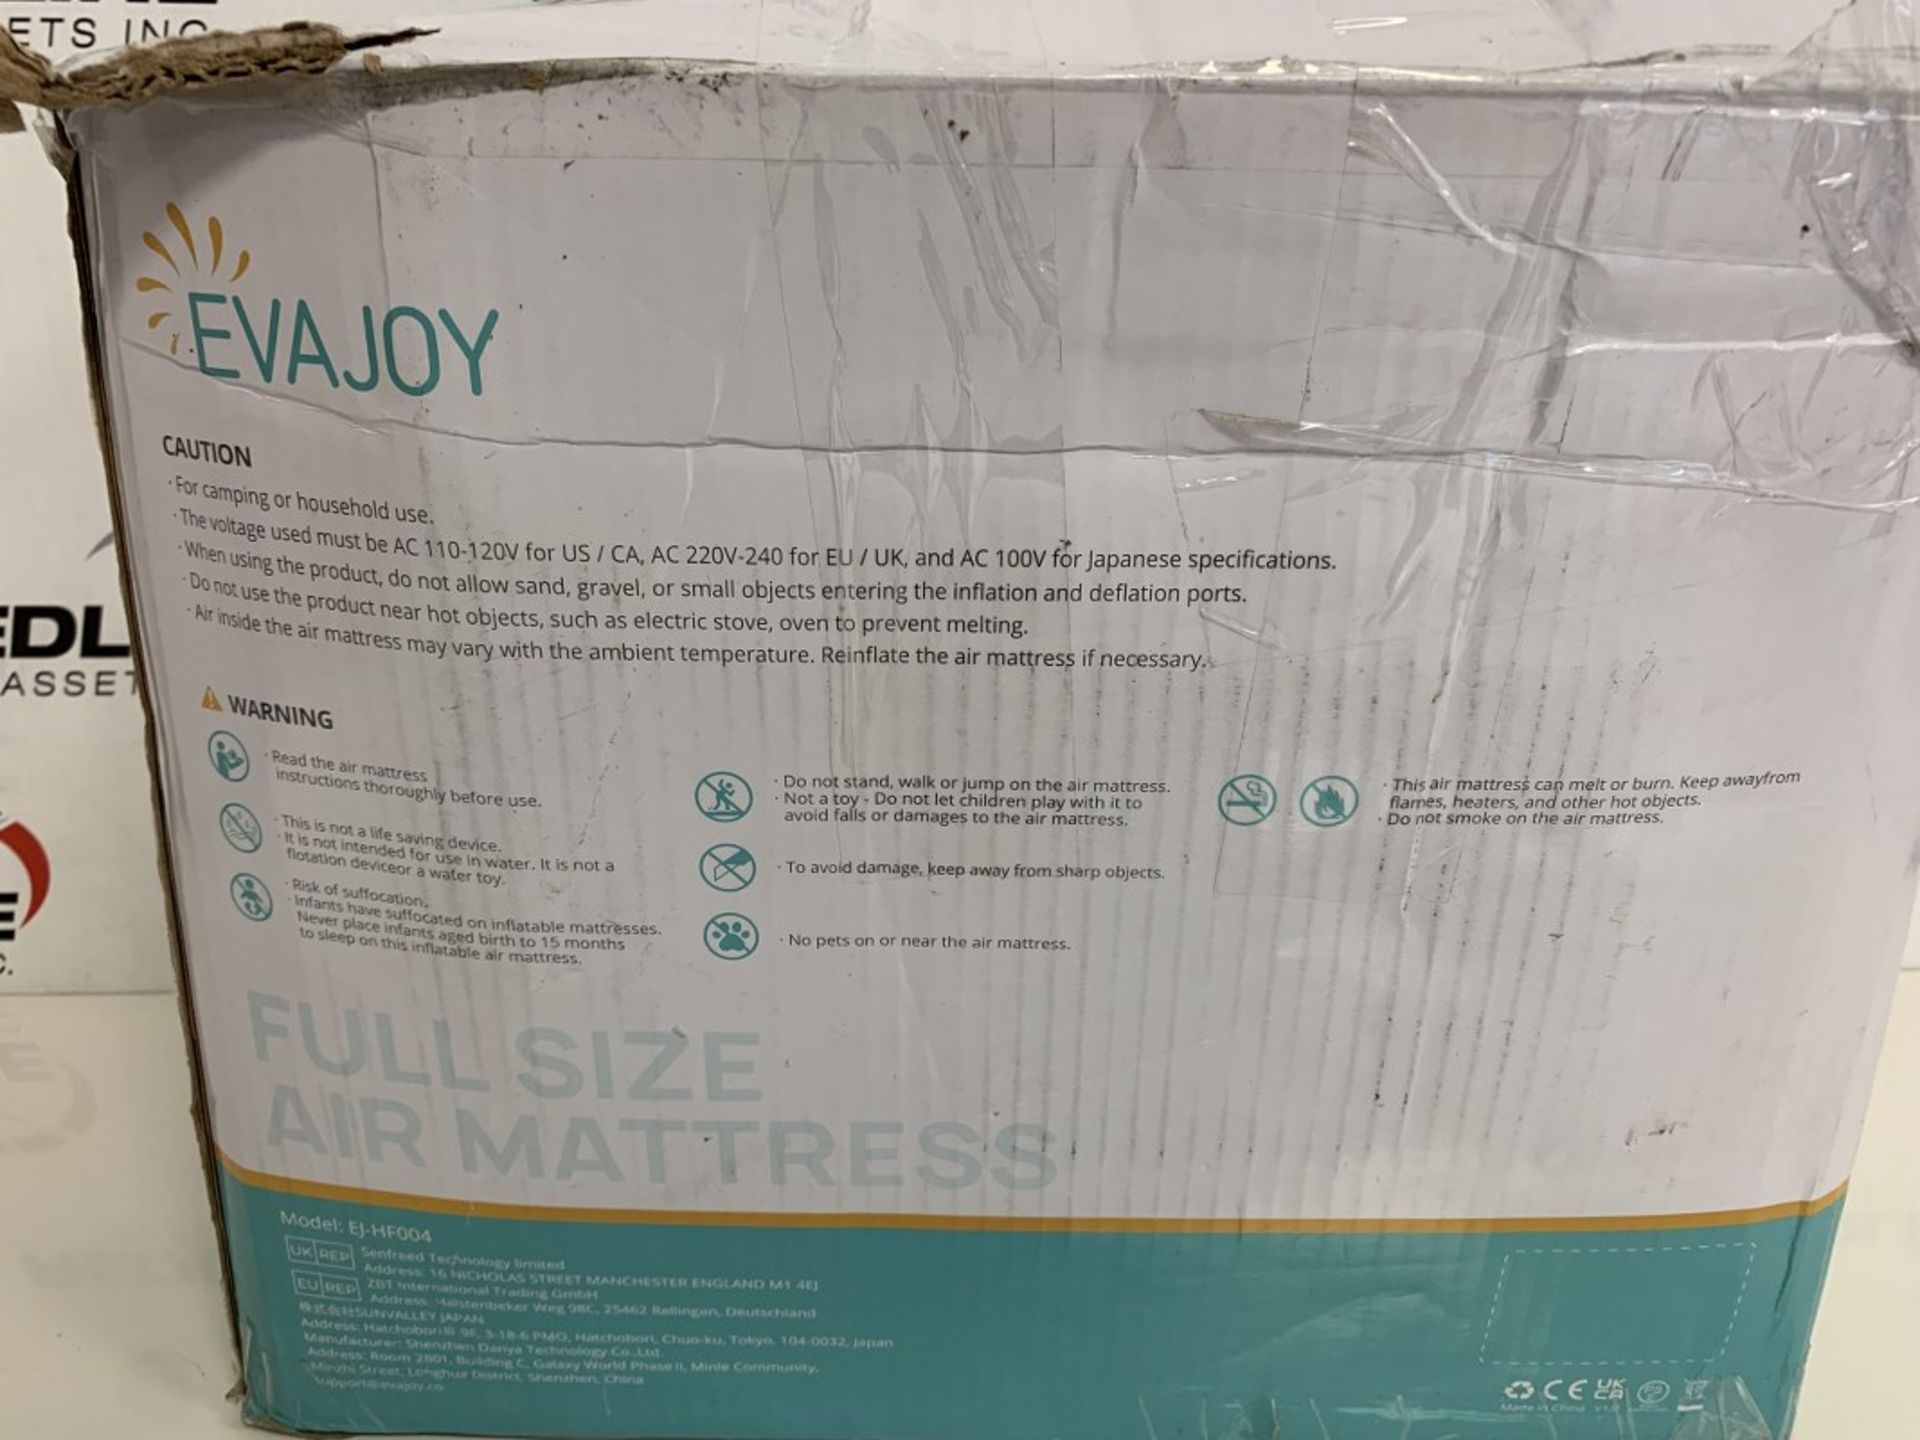 Evajoy - Full Size Air Matress - Image 2 of 2